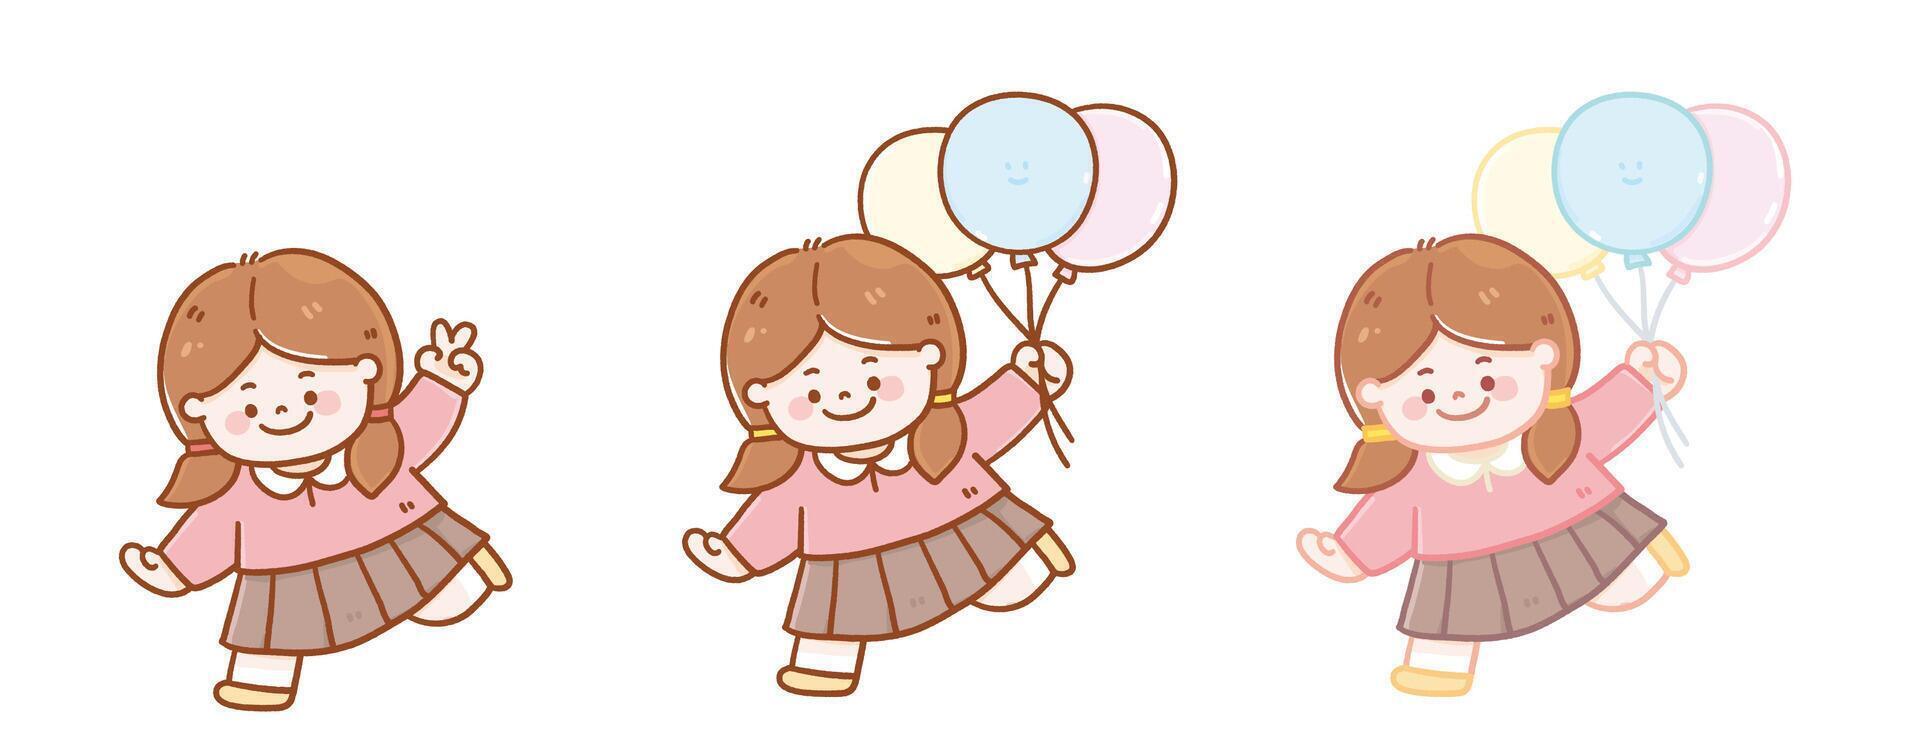 Vector cute illustration style. Happy kindergarten girl having fun and running holding balloons